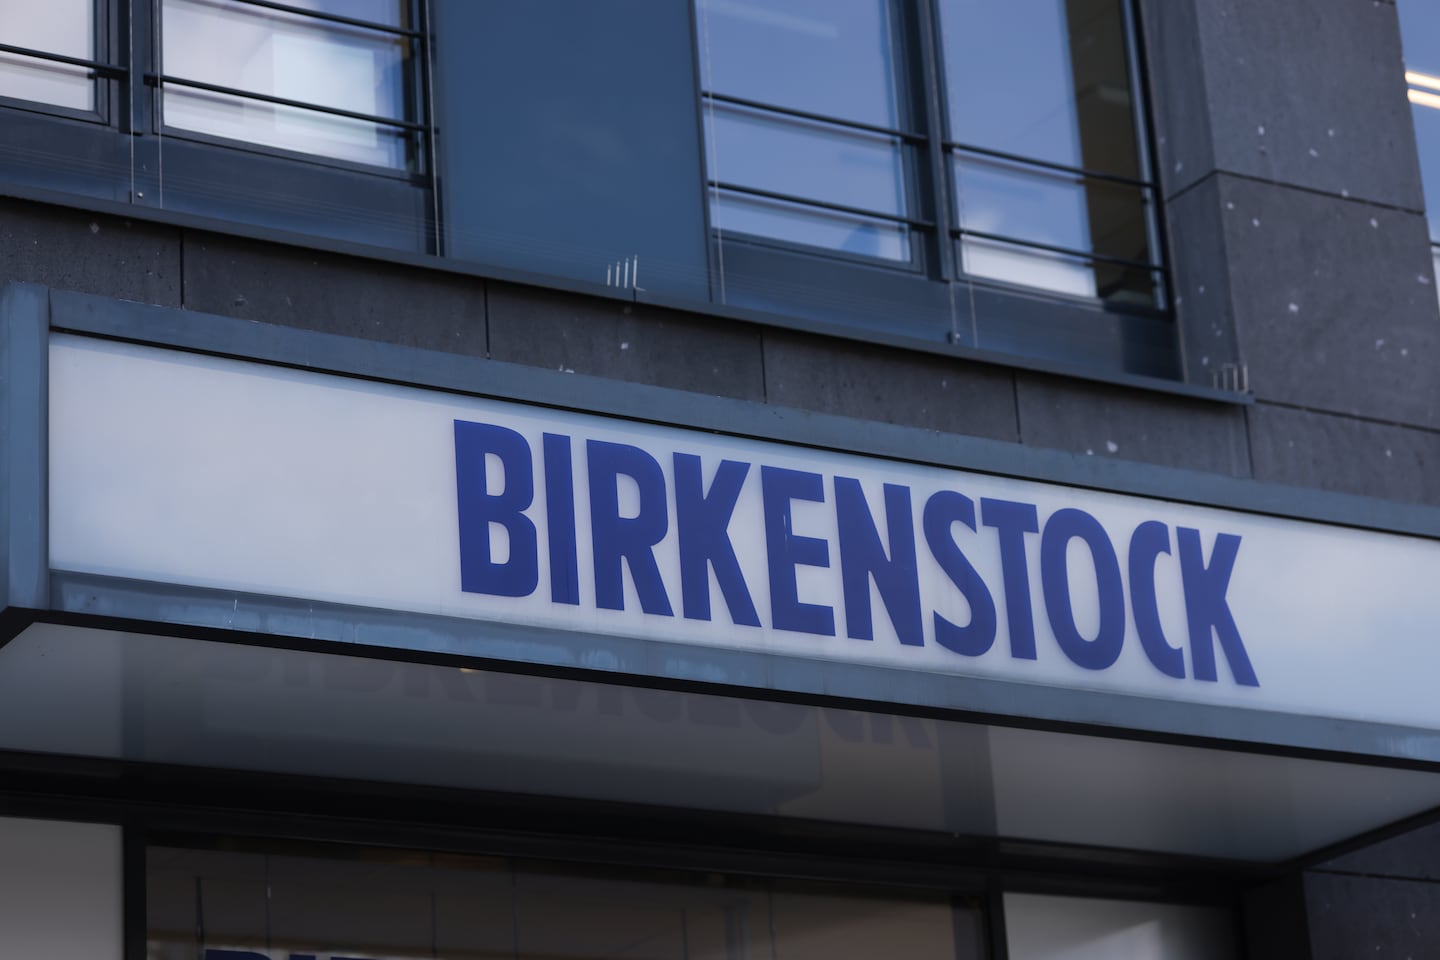 The exterior of the German shoe manufacturer Birkenstock.